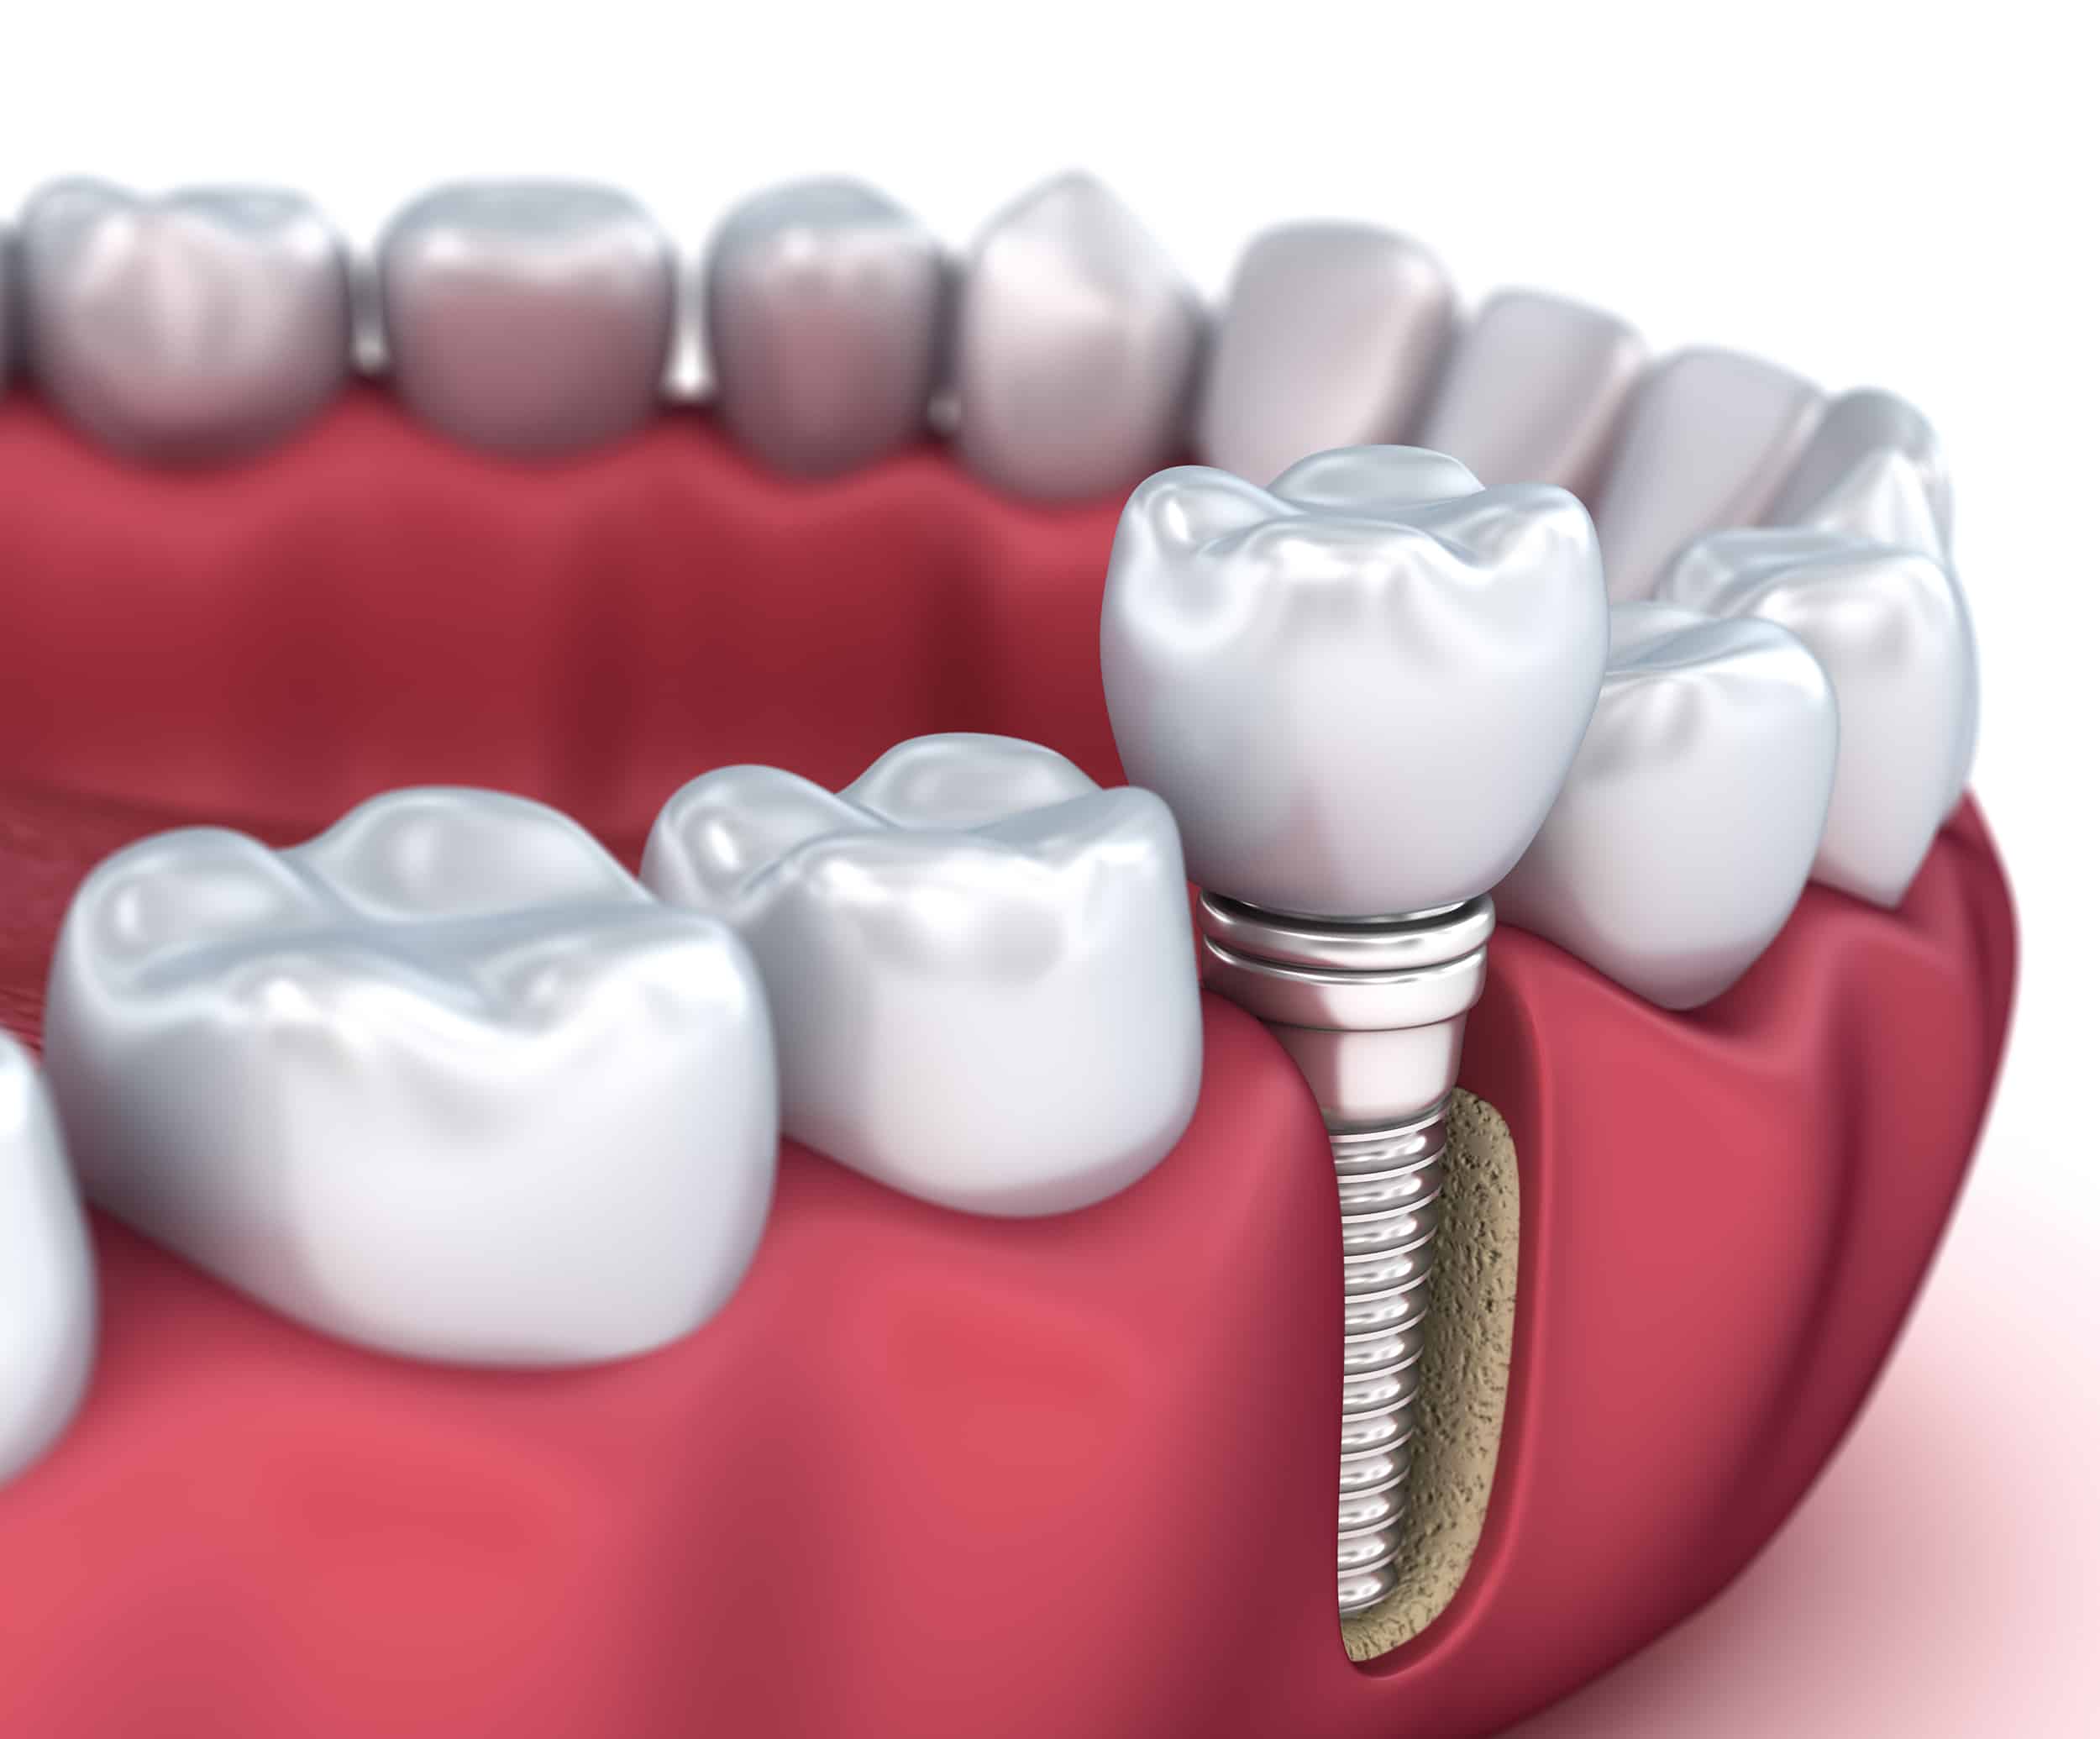 image showing dental implant